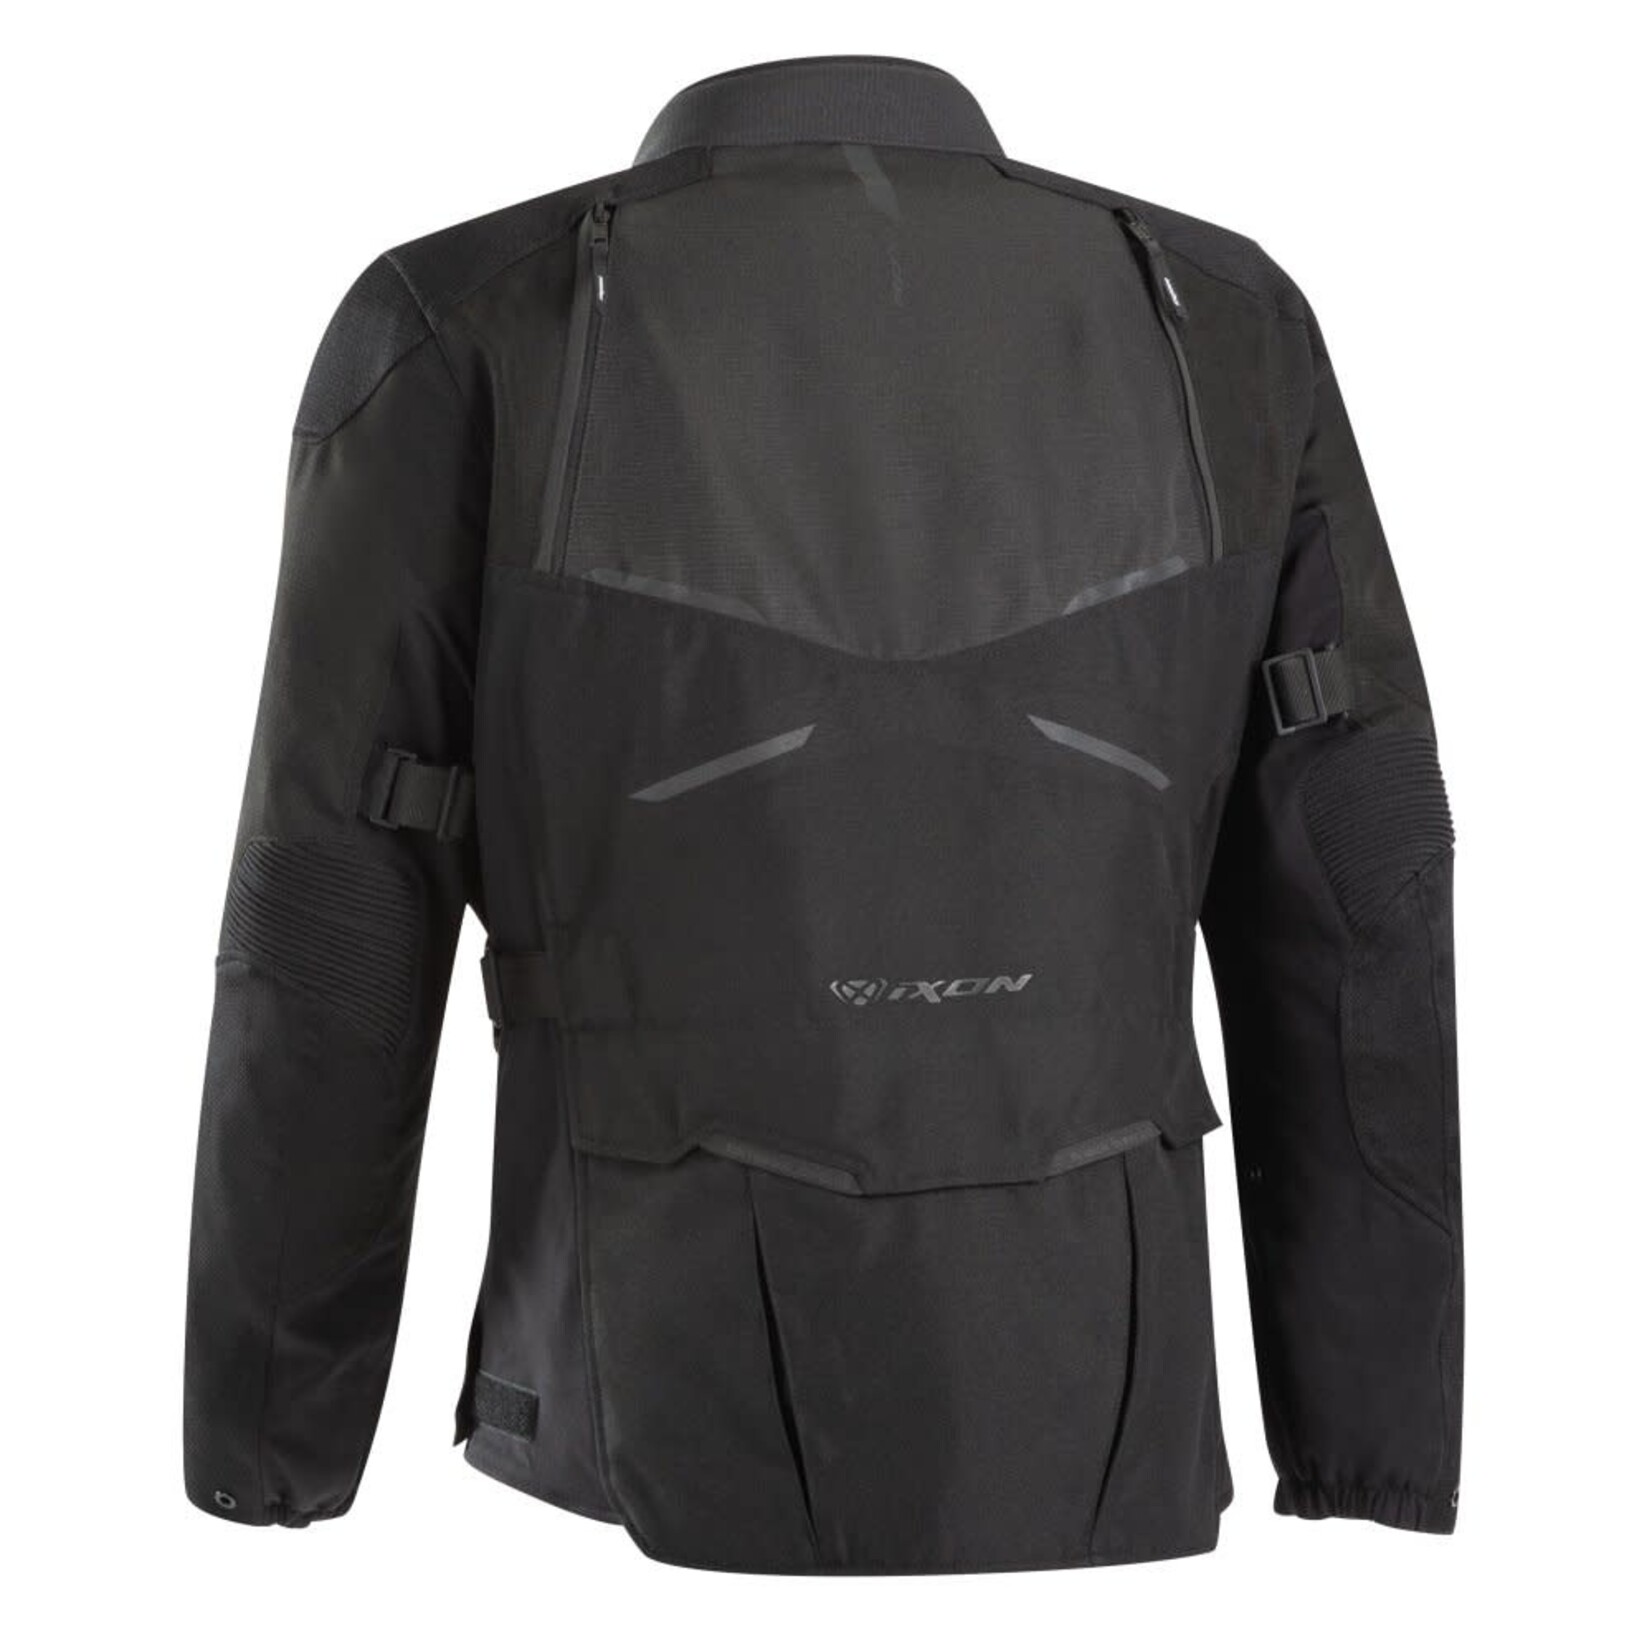 Ixon Ixon jacket textile ladies eddas c black/anthracite